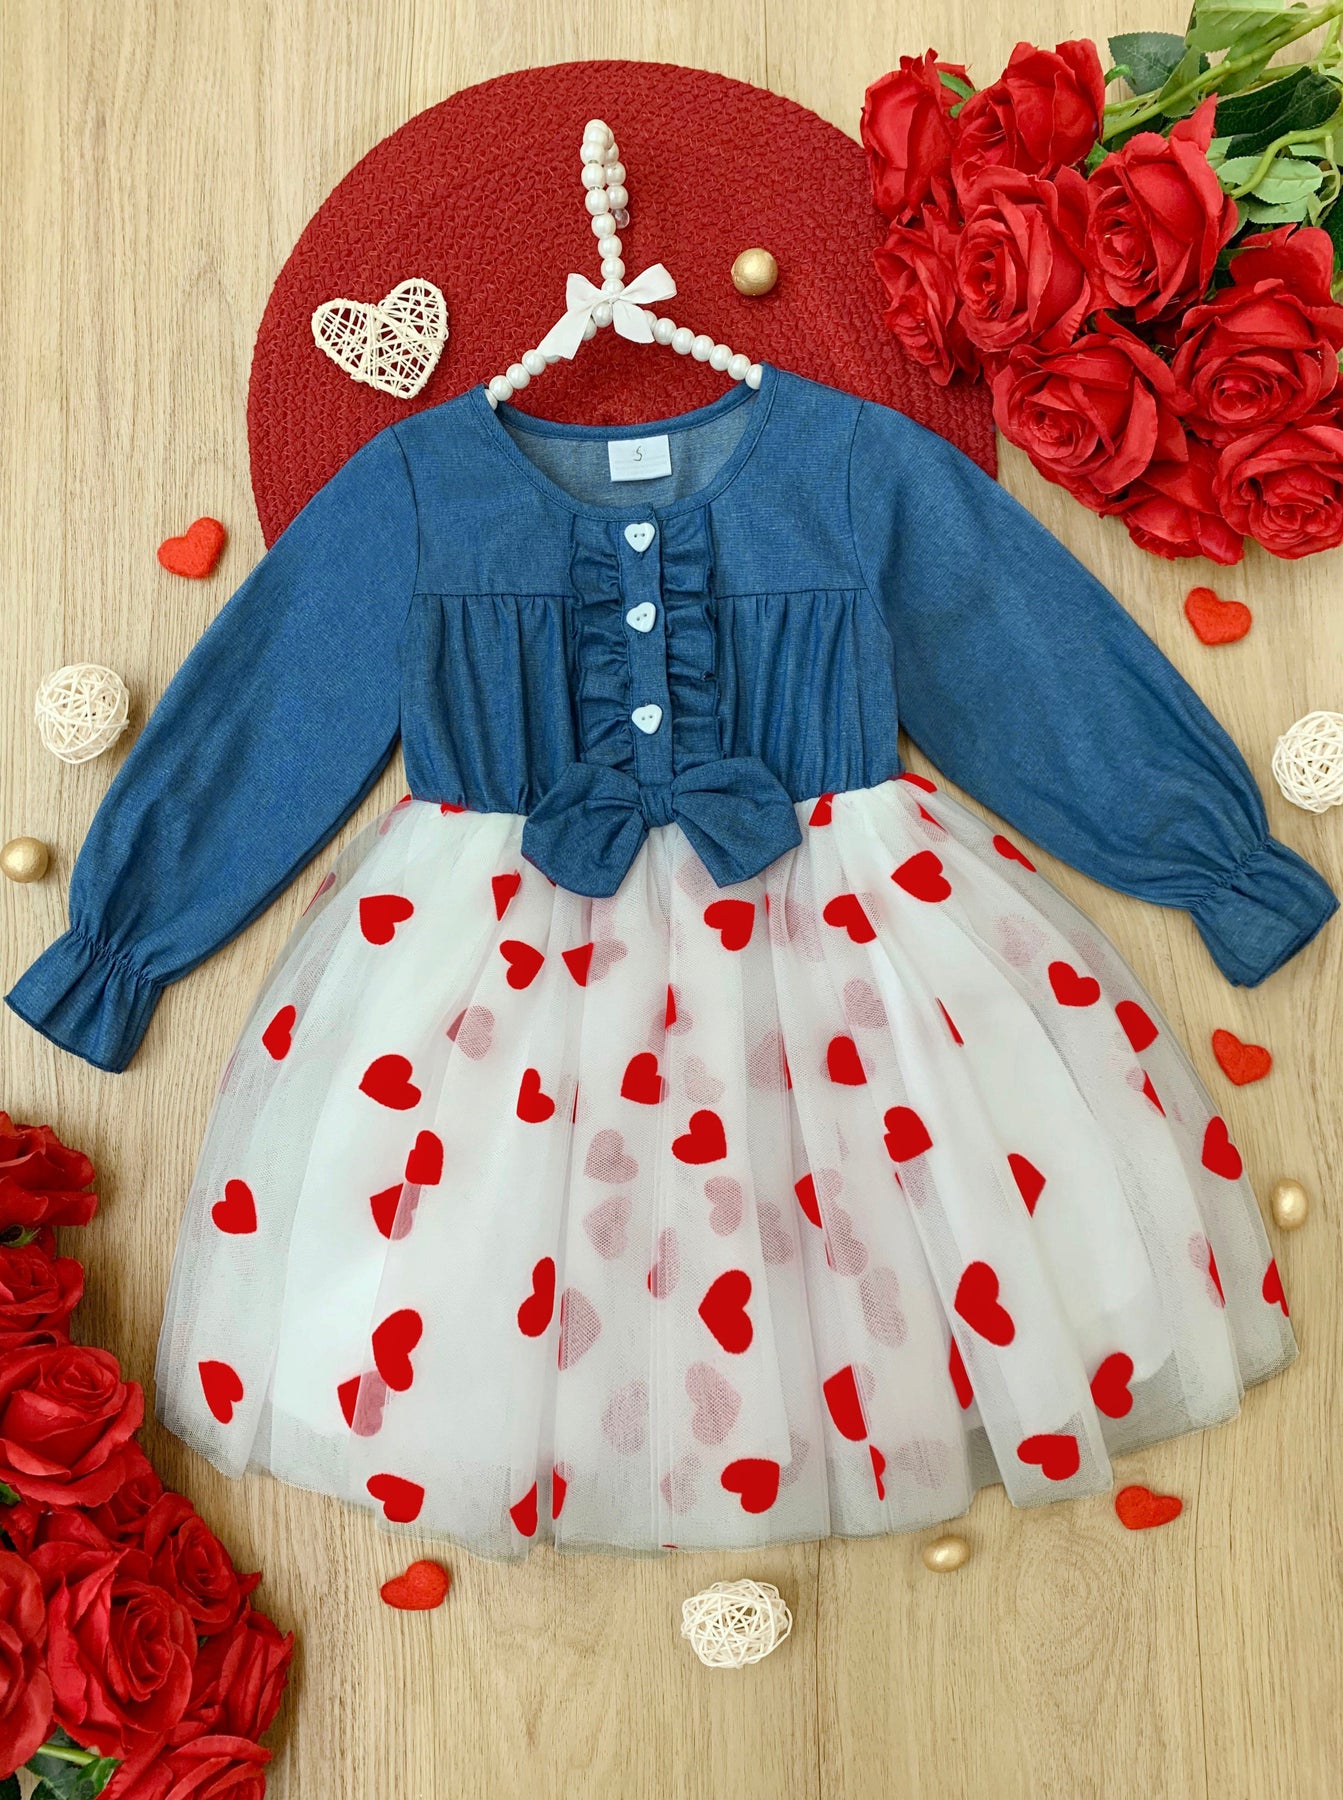 Toddler Valentine's Outfits| Girls Denim Bodice Heart Print Tutu Dress ...